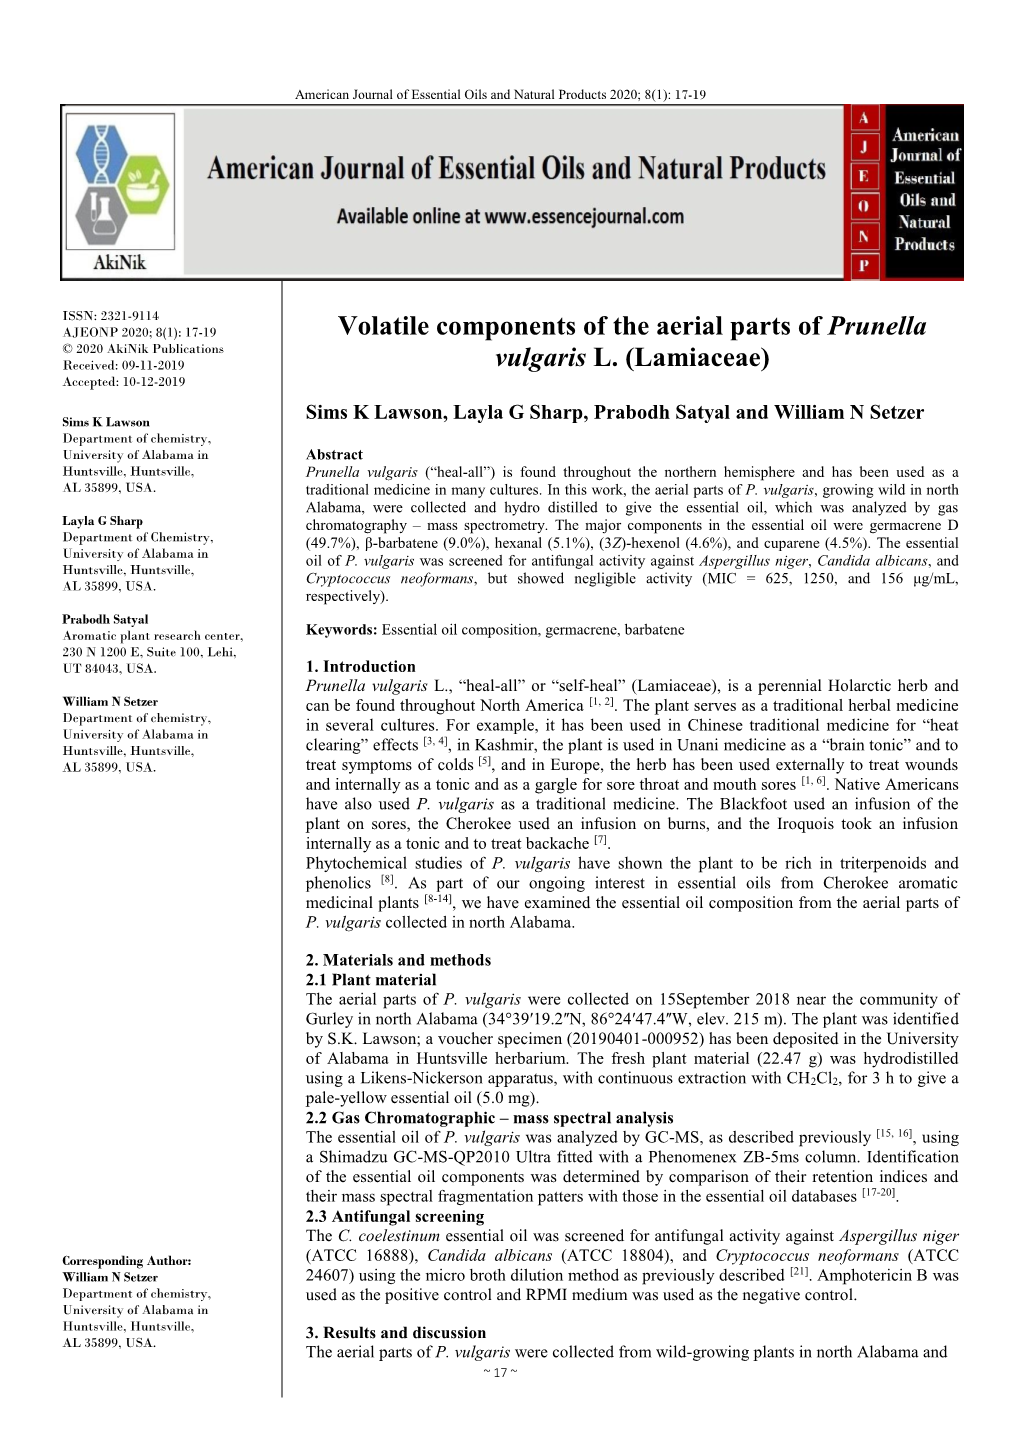 Volatile Components of the Aerial Parts of Prunella Vulgaris L. (Lamiaceae)